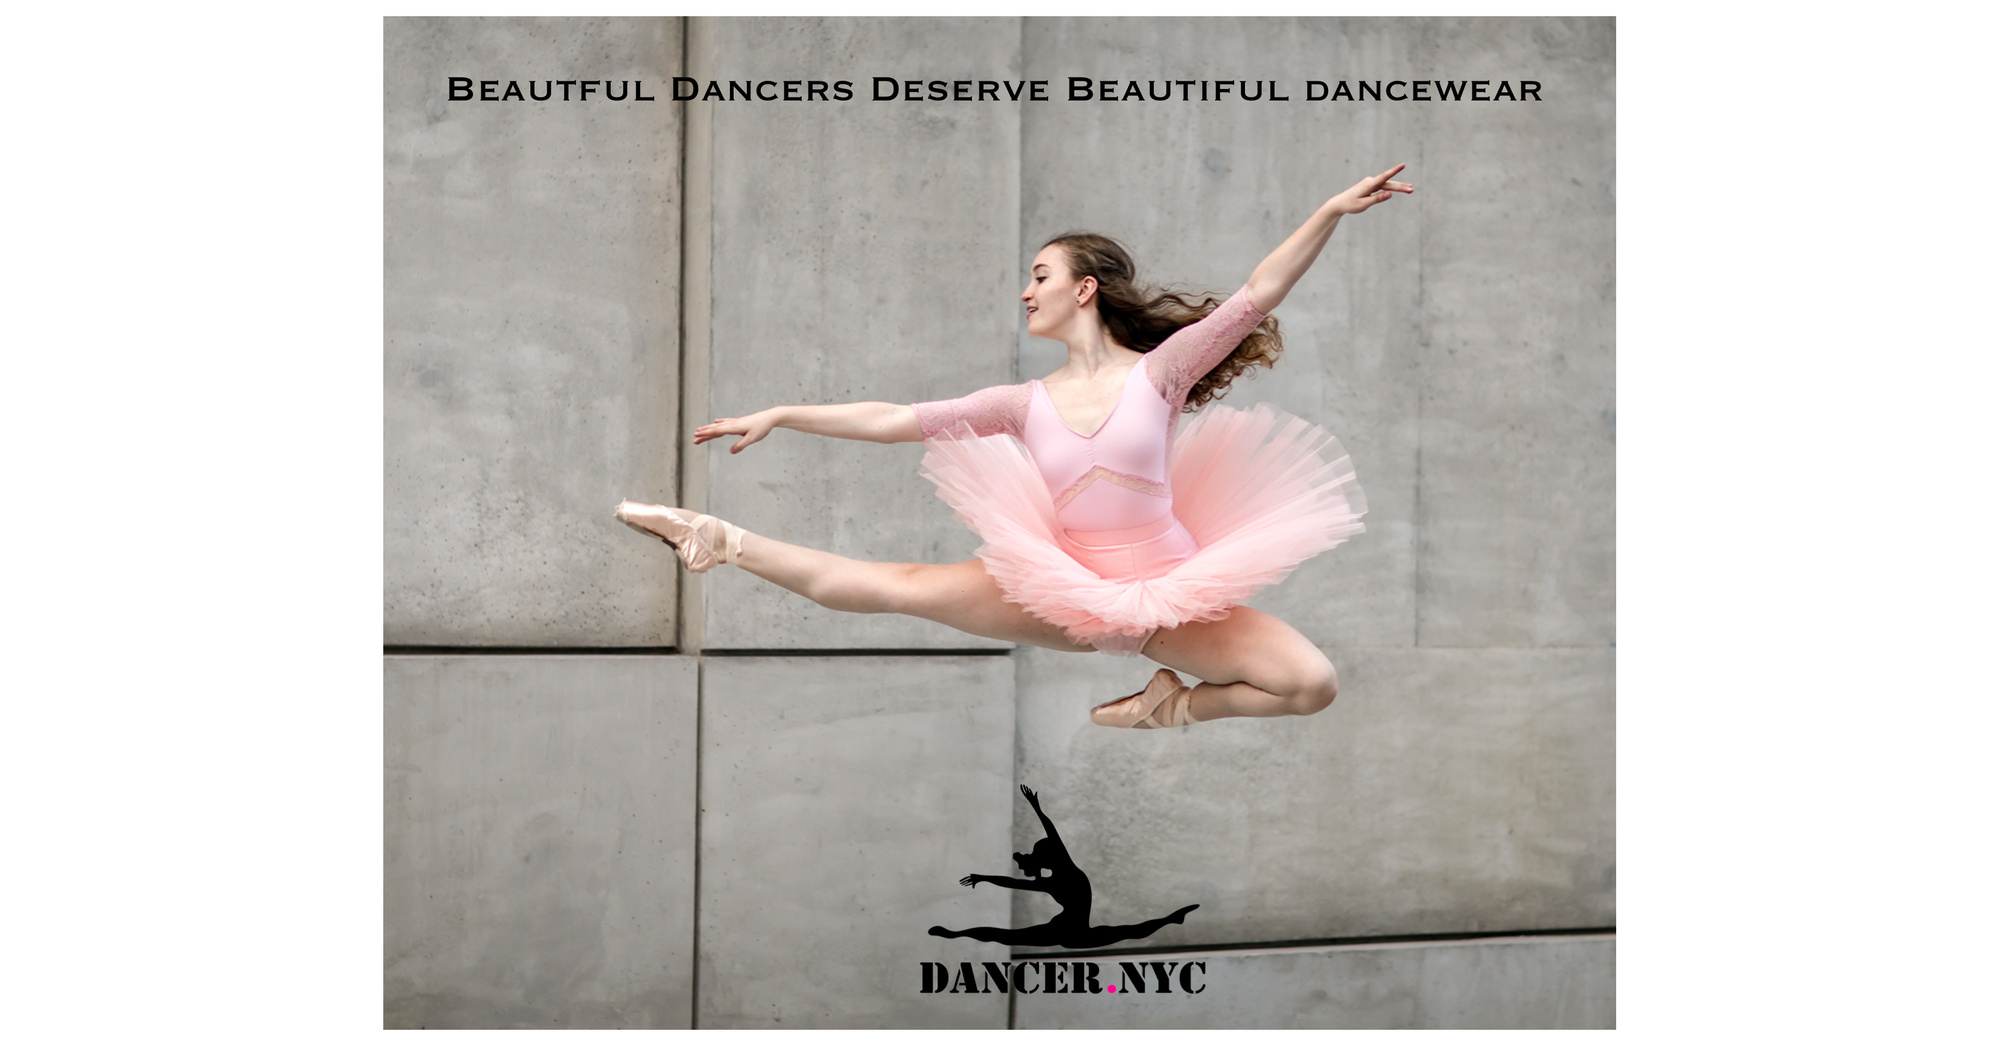 Designed by Dancers for Dancers - Dancer.NYC